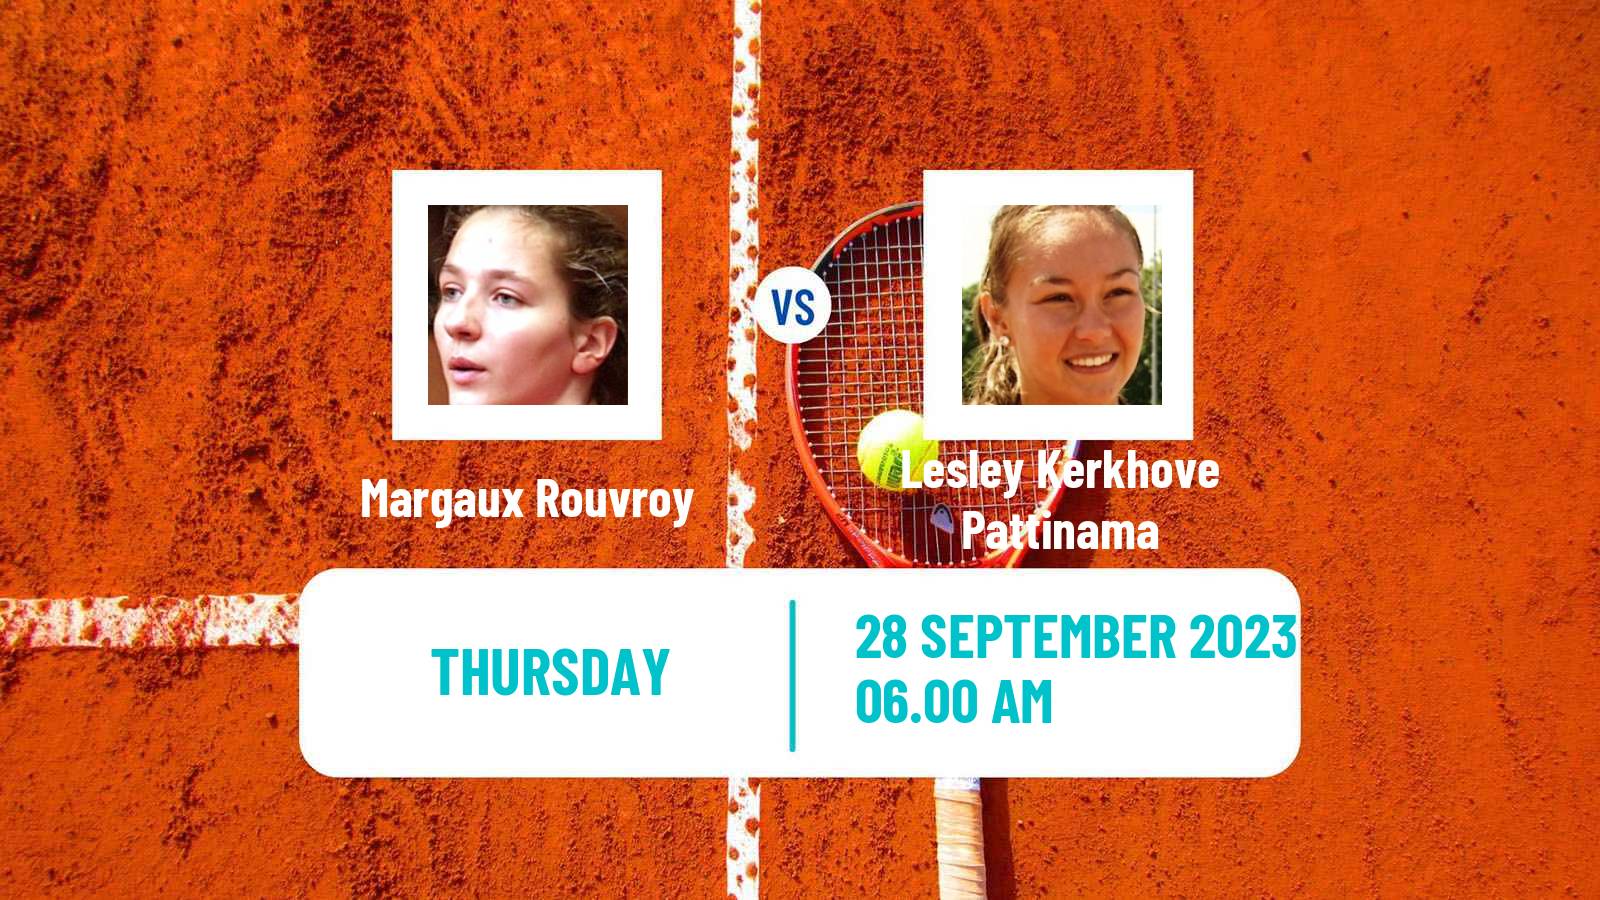 Tennis ITF W25 Santarem Women Margaux Rouvroy - Lesley Kerkhove Pattinama